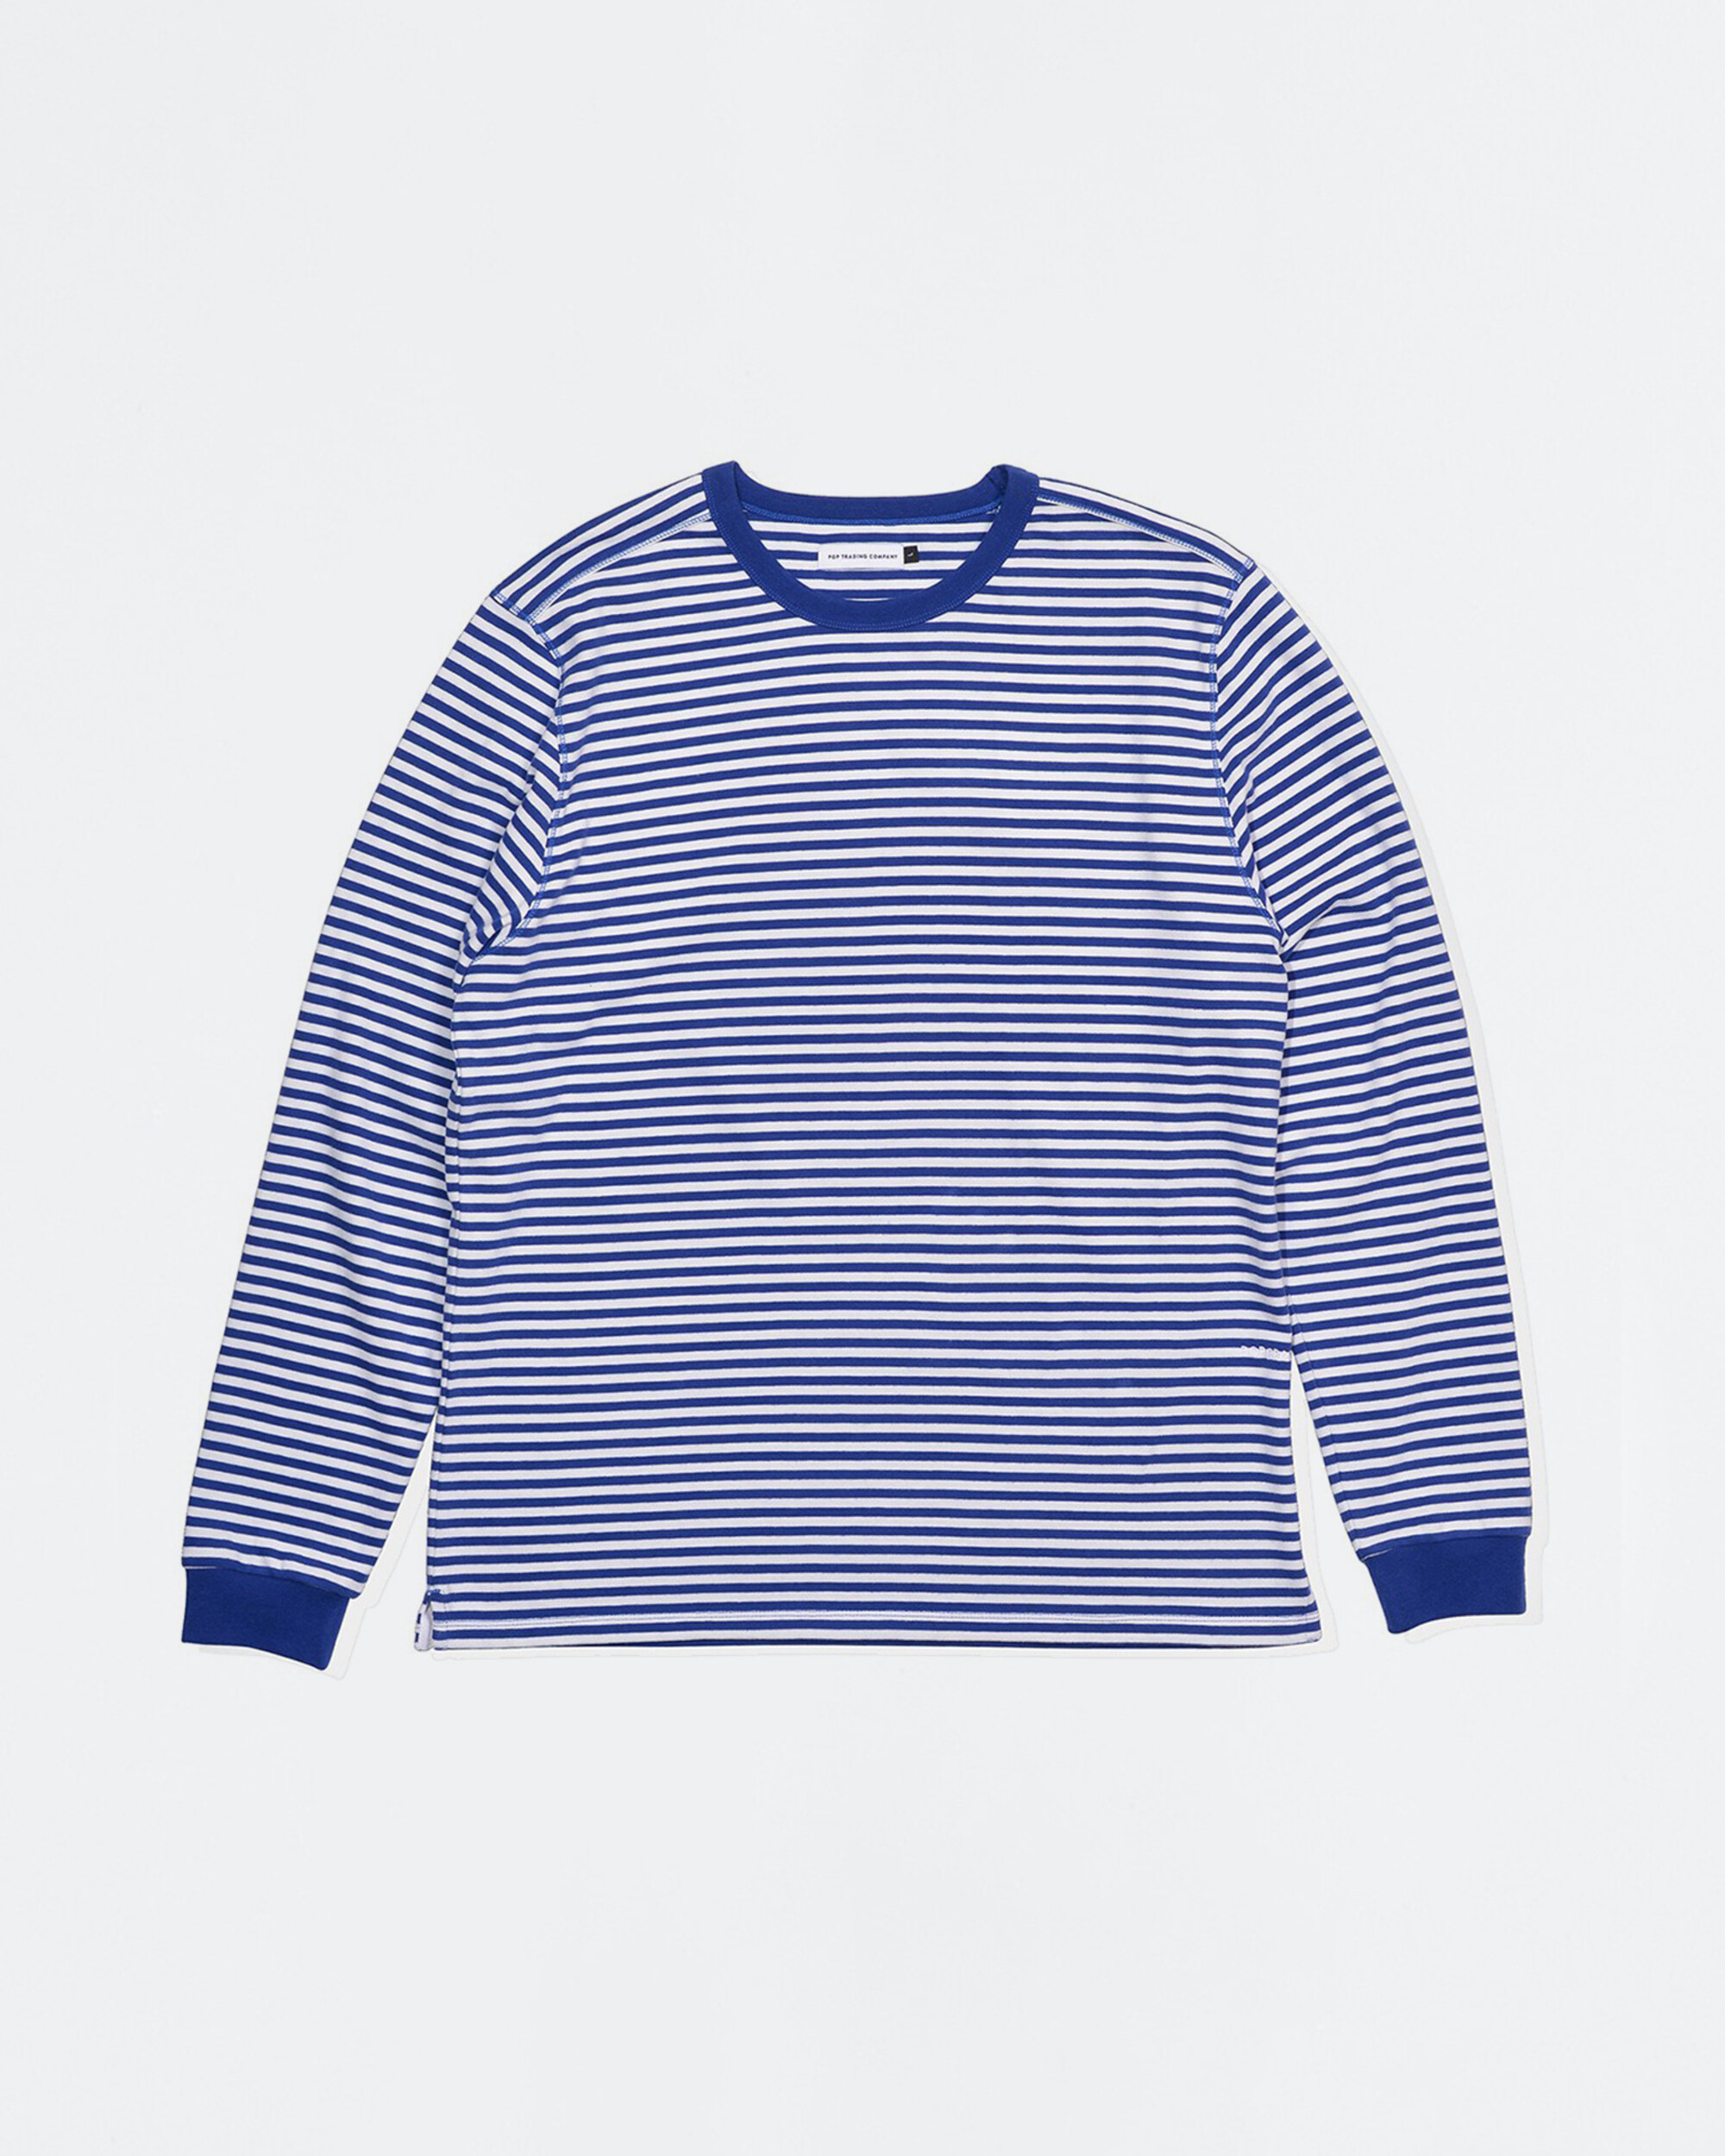 Pop Trading Co X Popeye striped longsleeve T-shirt royal/white